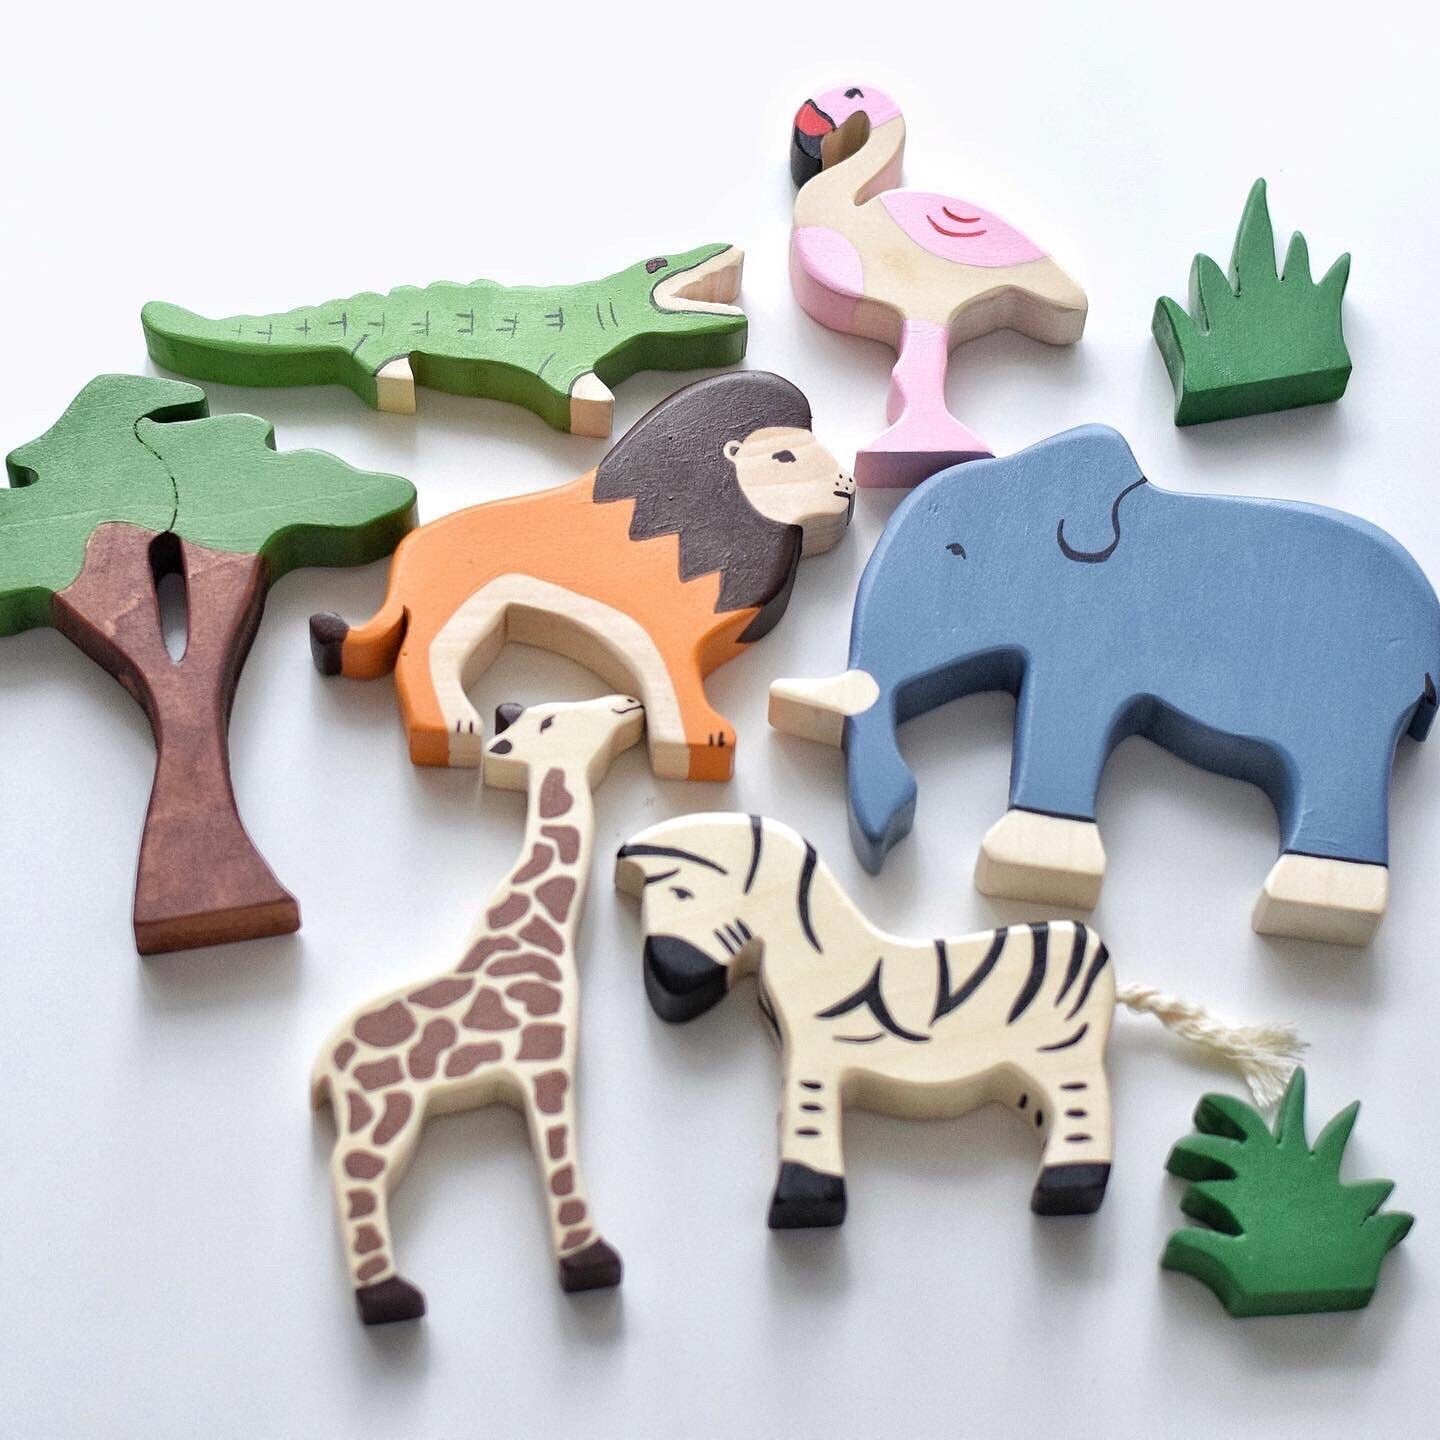 Handmade Wooden Zoo Animals Set